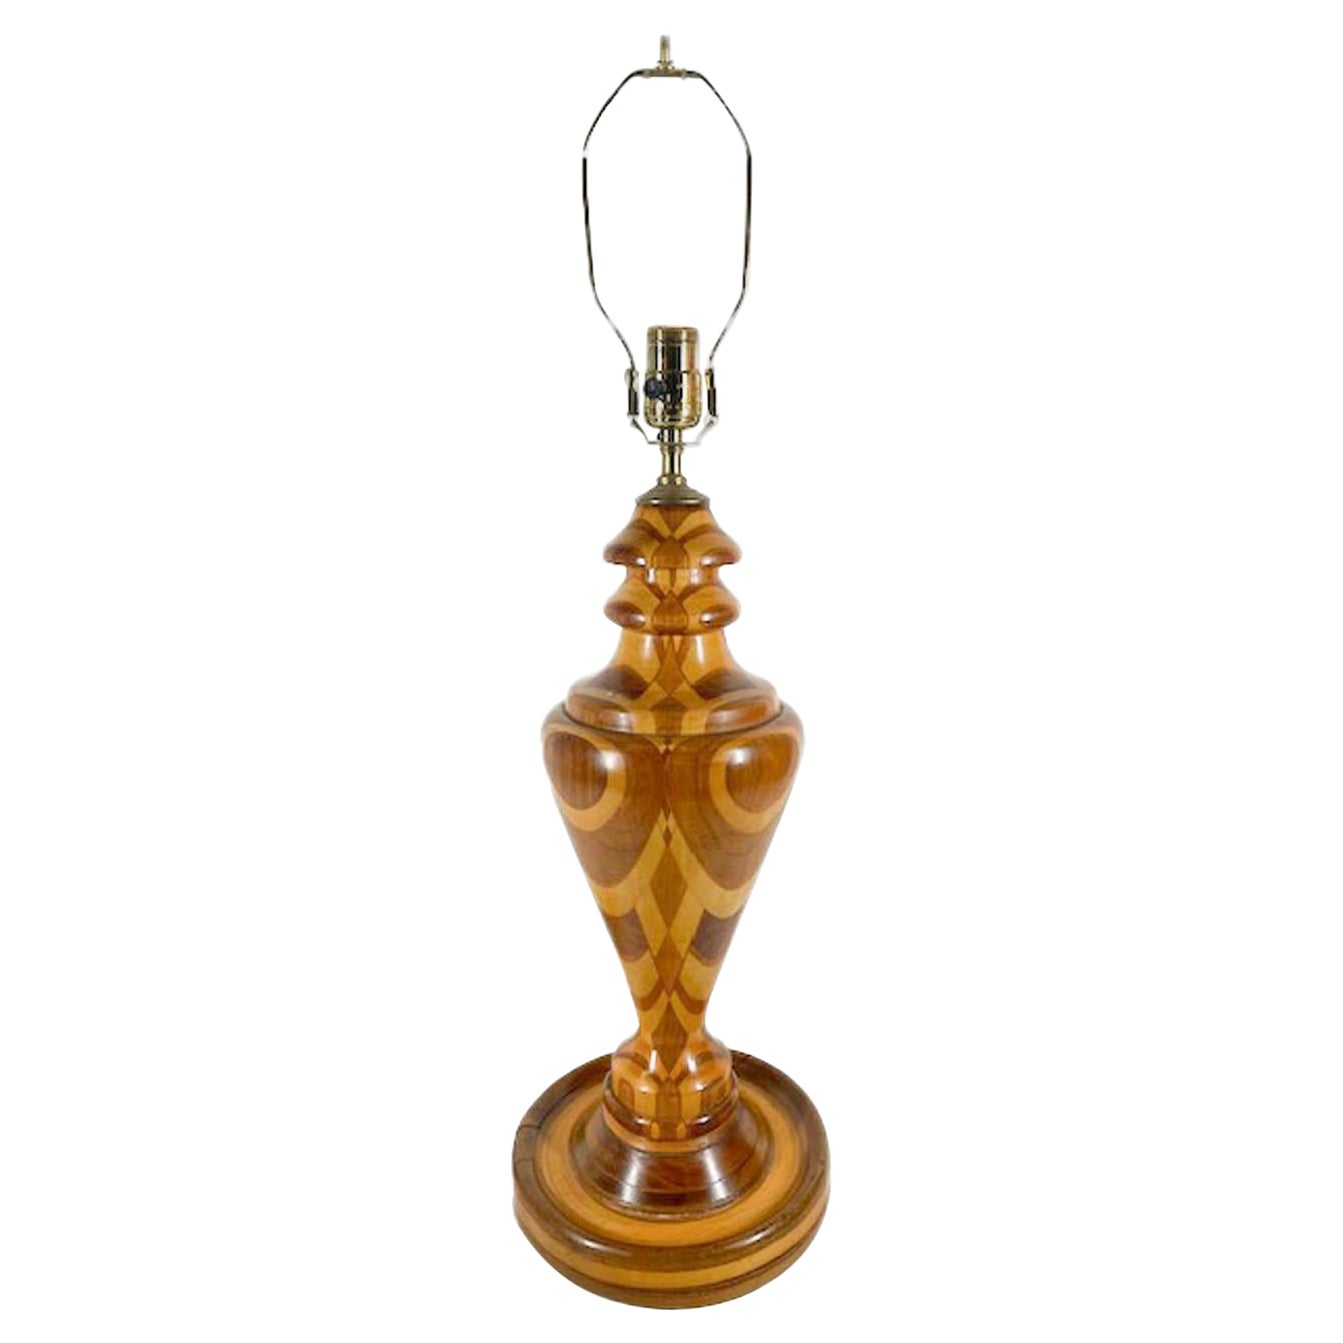 Vintage Turned Wood Lamp Made of Mahogany, Maple and Walnut